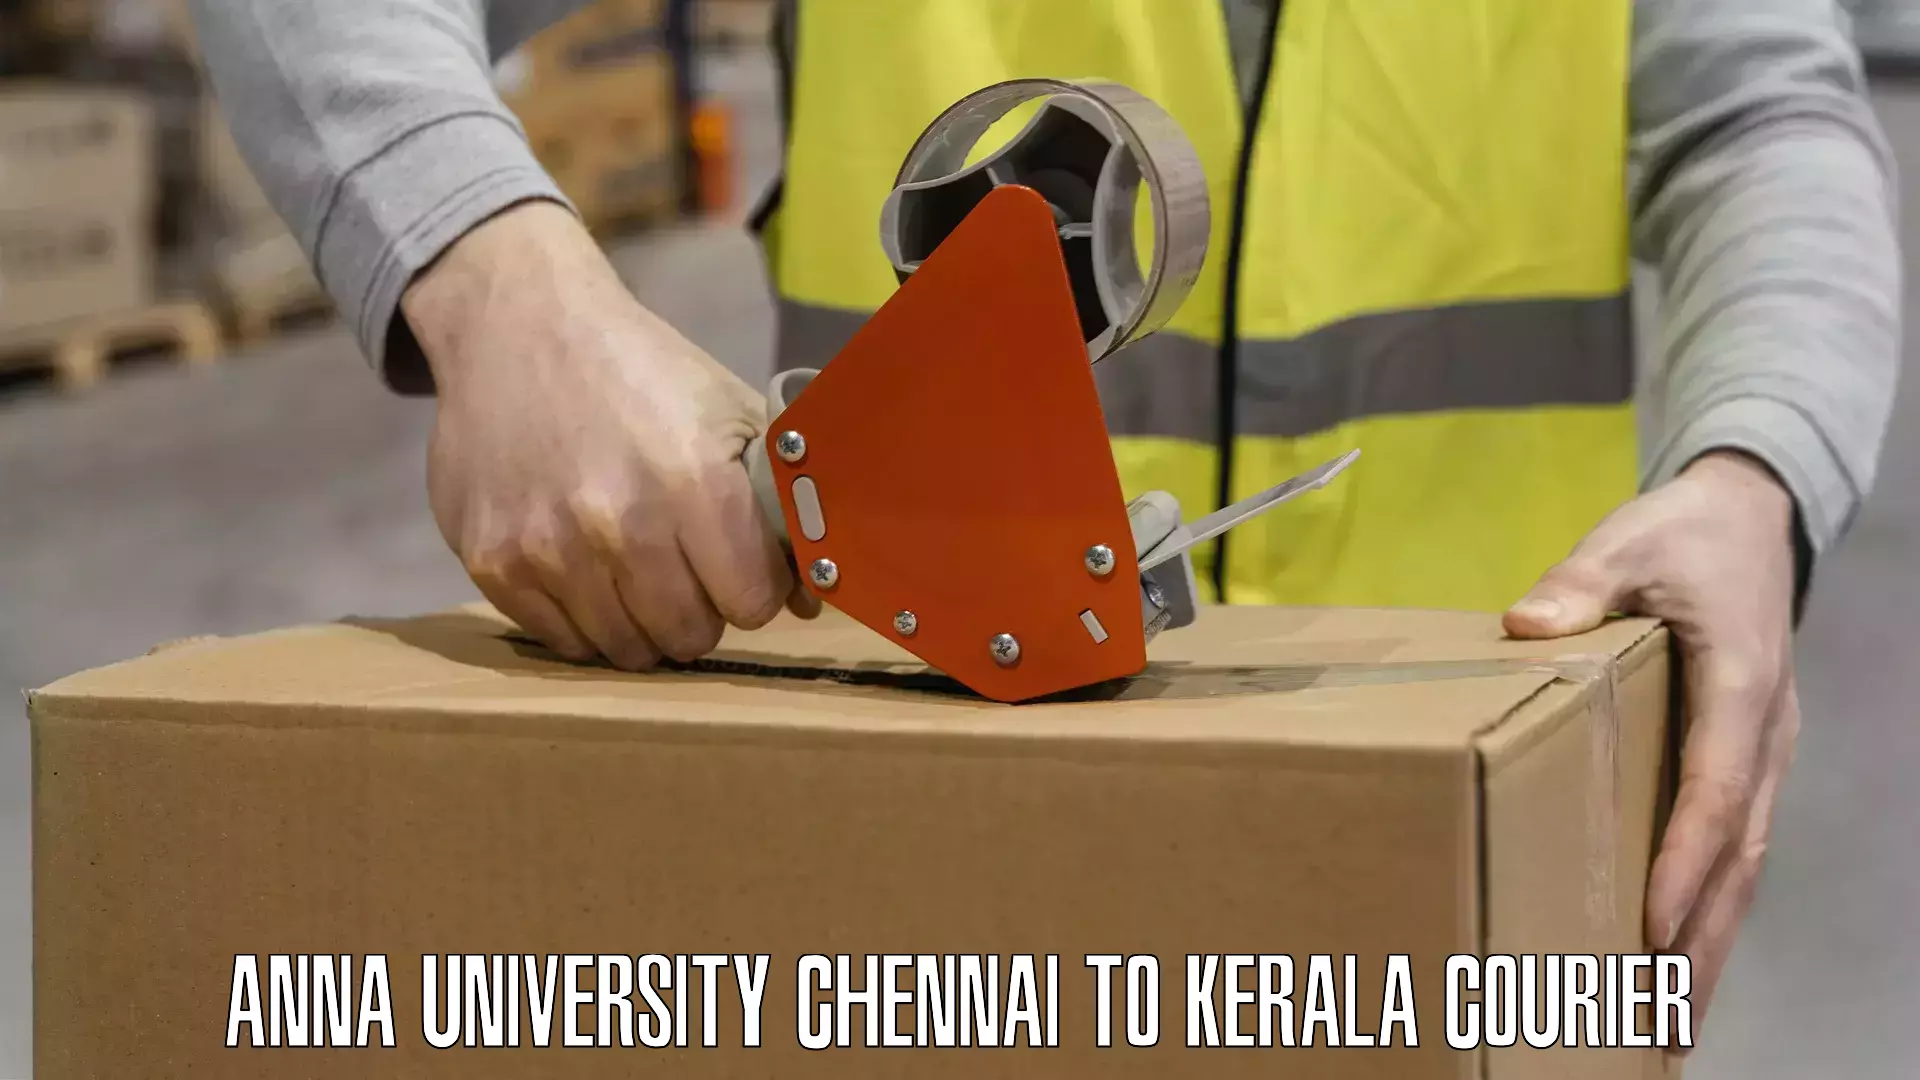 Rural area delivery Anna University Chennai to Chungatra